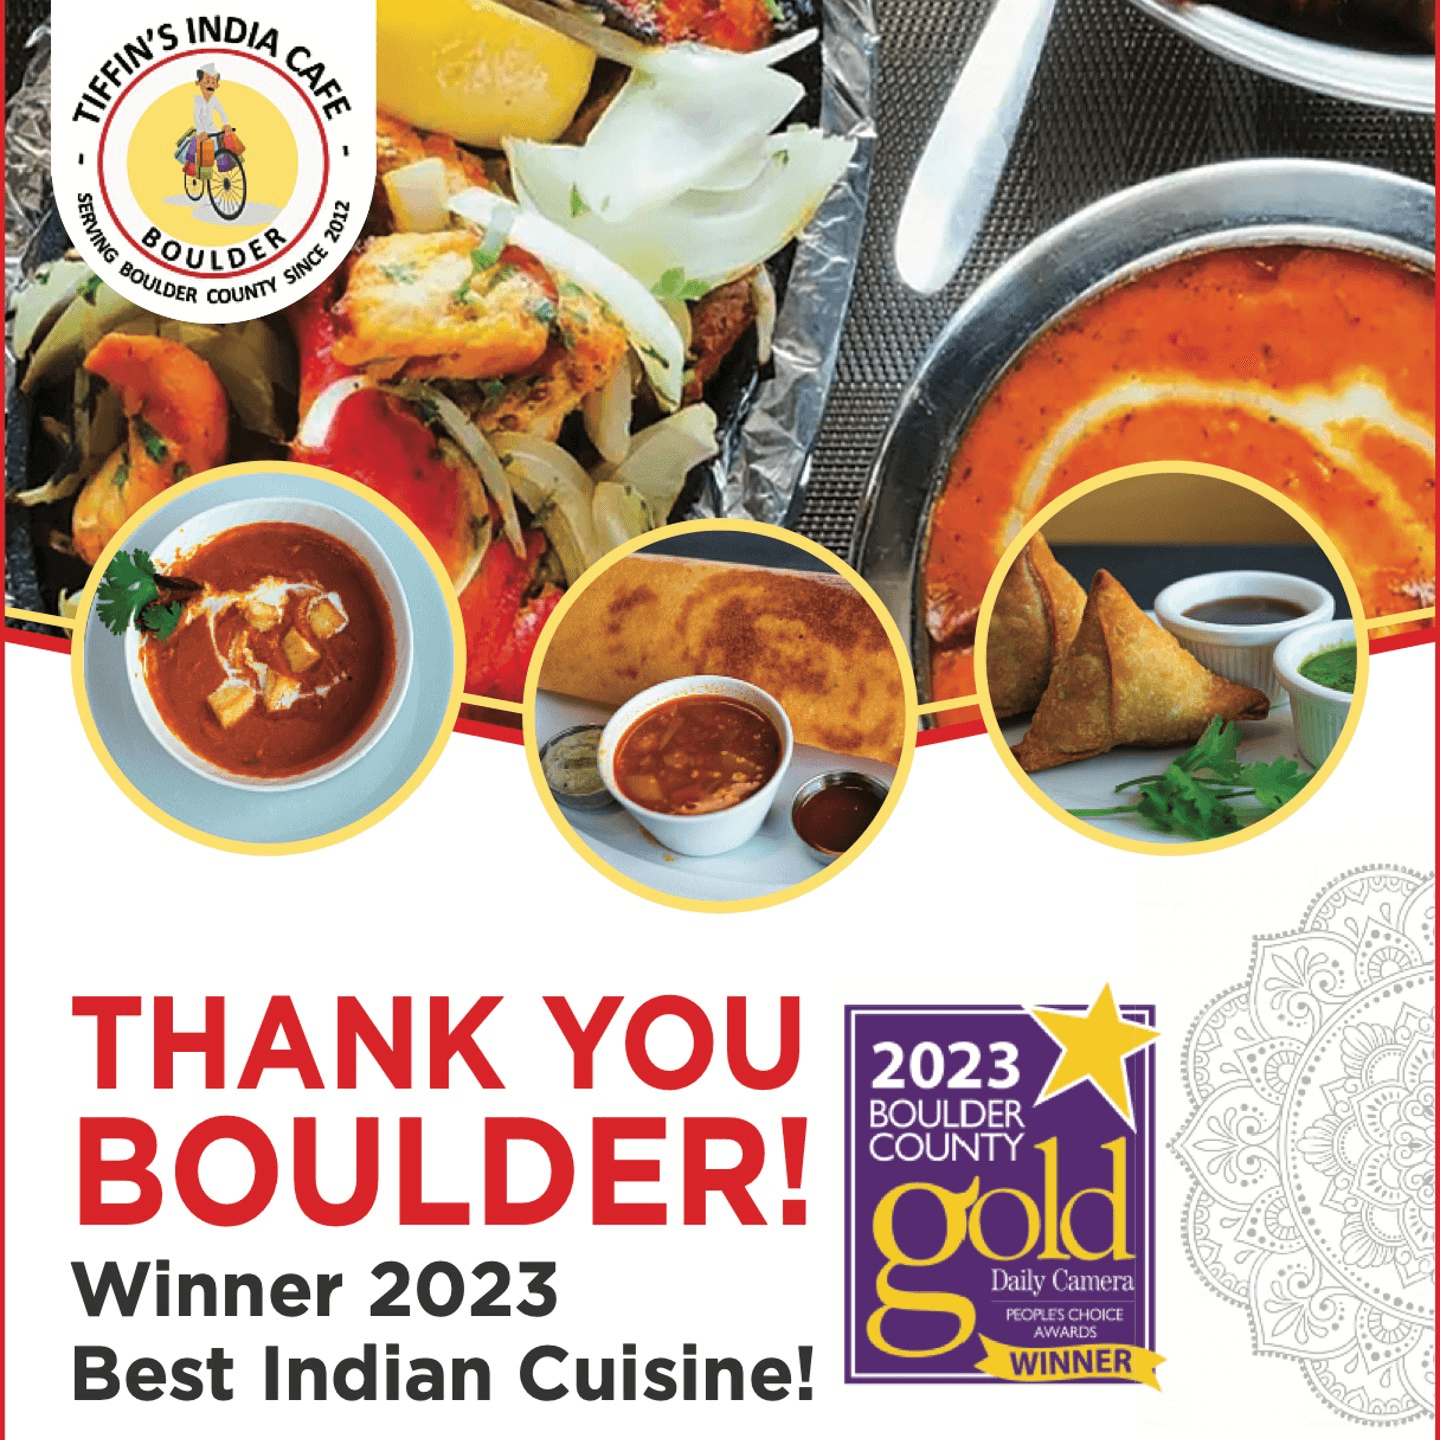 Voted Best Indian Cuisine 2023 in Boulder!